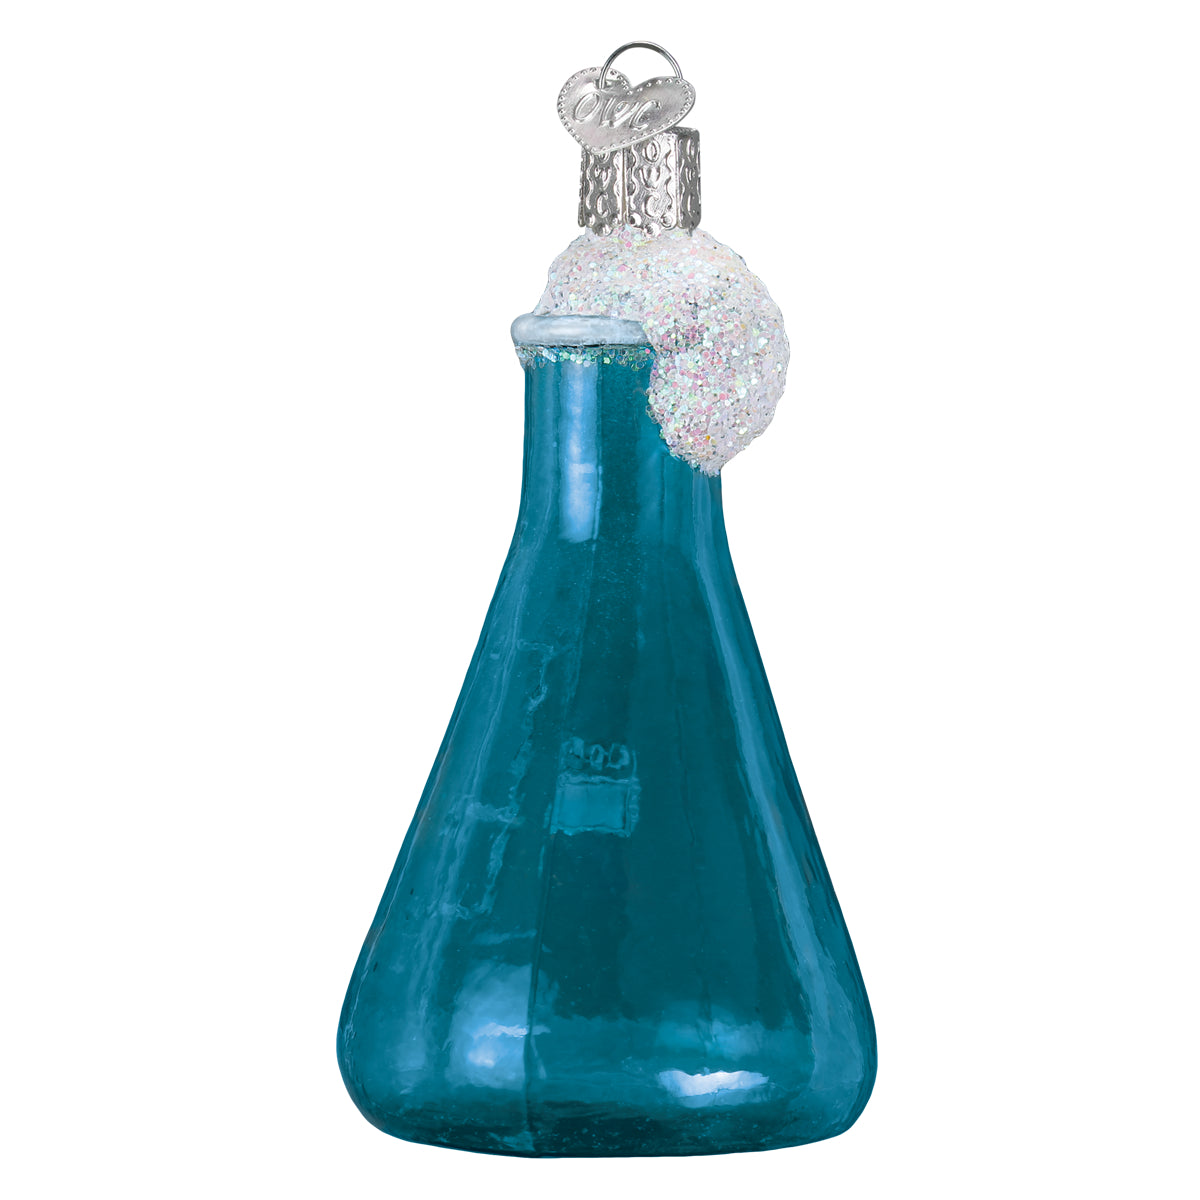 Science Beaker Ornament